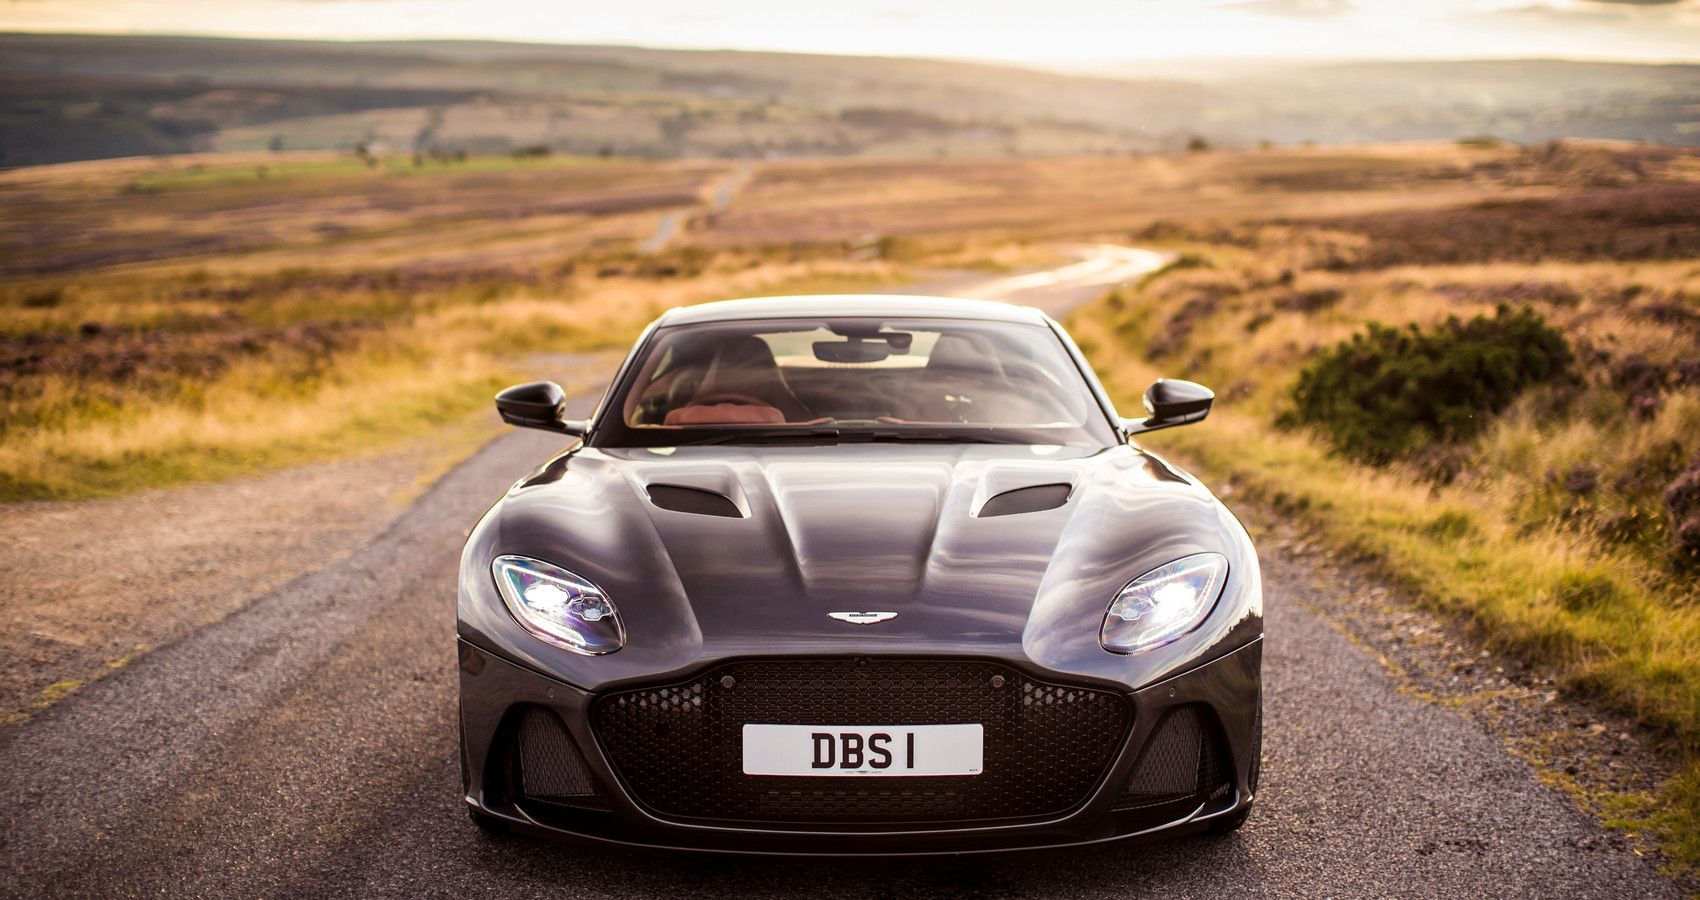 Aston Martin DBS - Front